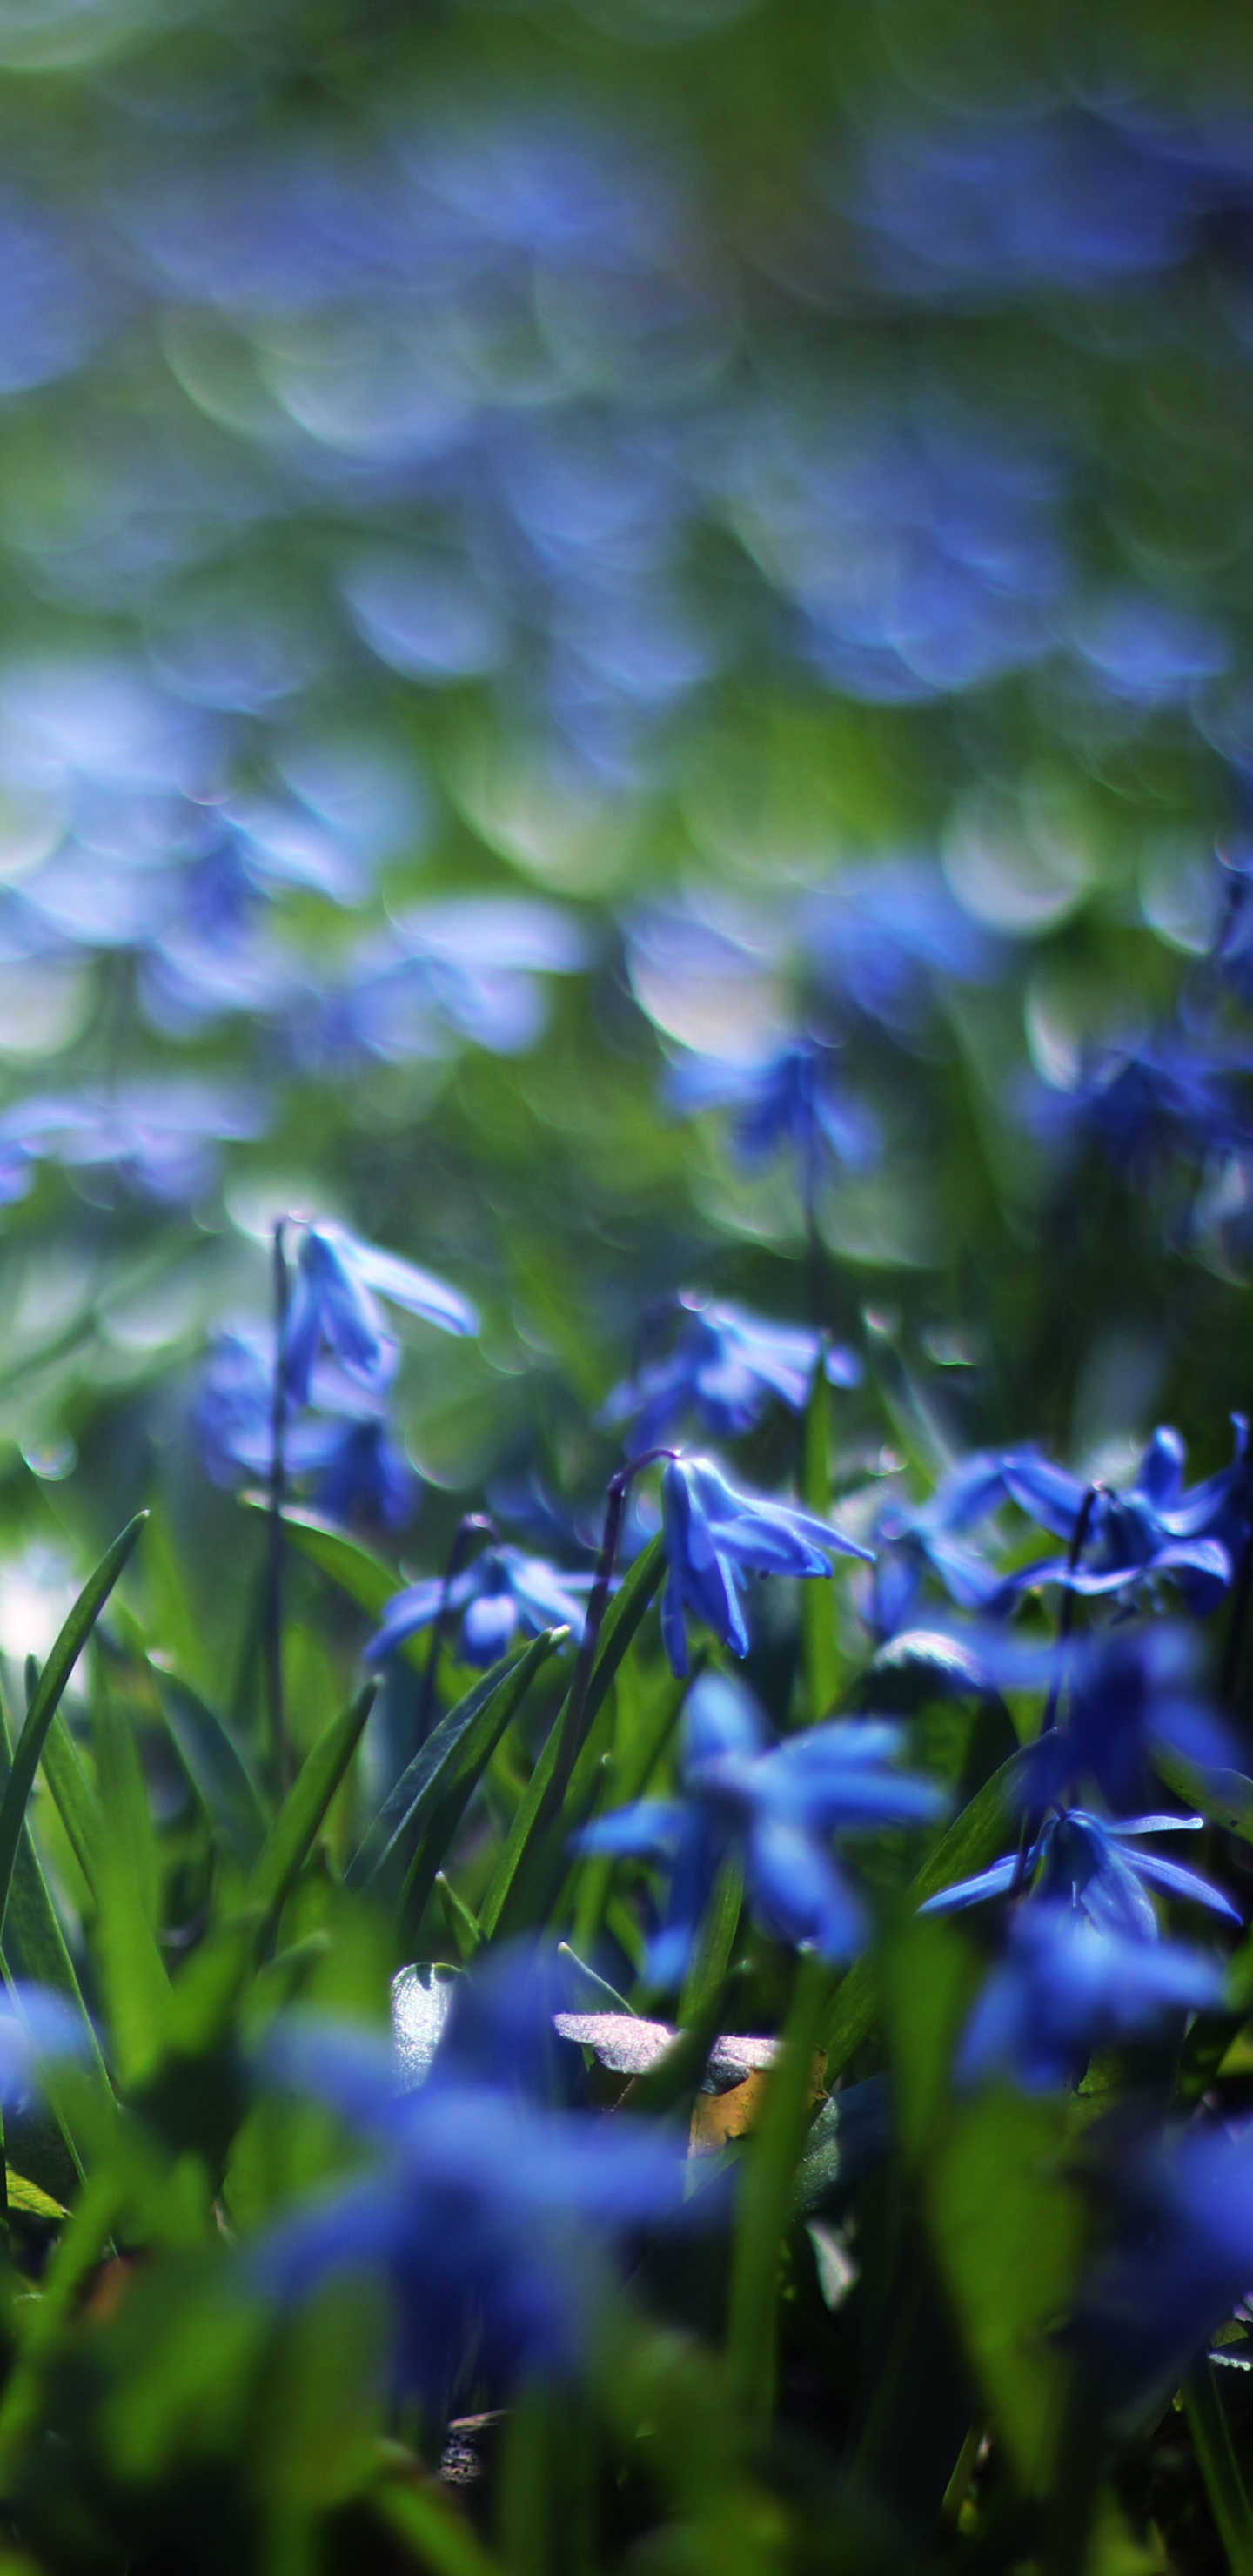 Descarga gratis la imagen Naturaleza, Flores, Flor, De Cerca, Bokeh, Tierra/naturaleza, Flor Azul en el escritorio de tu PC